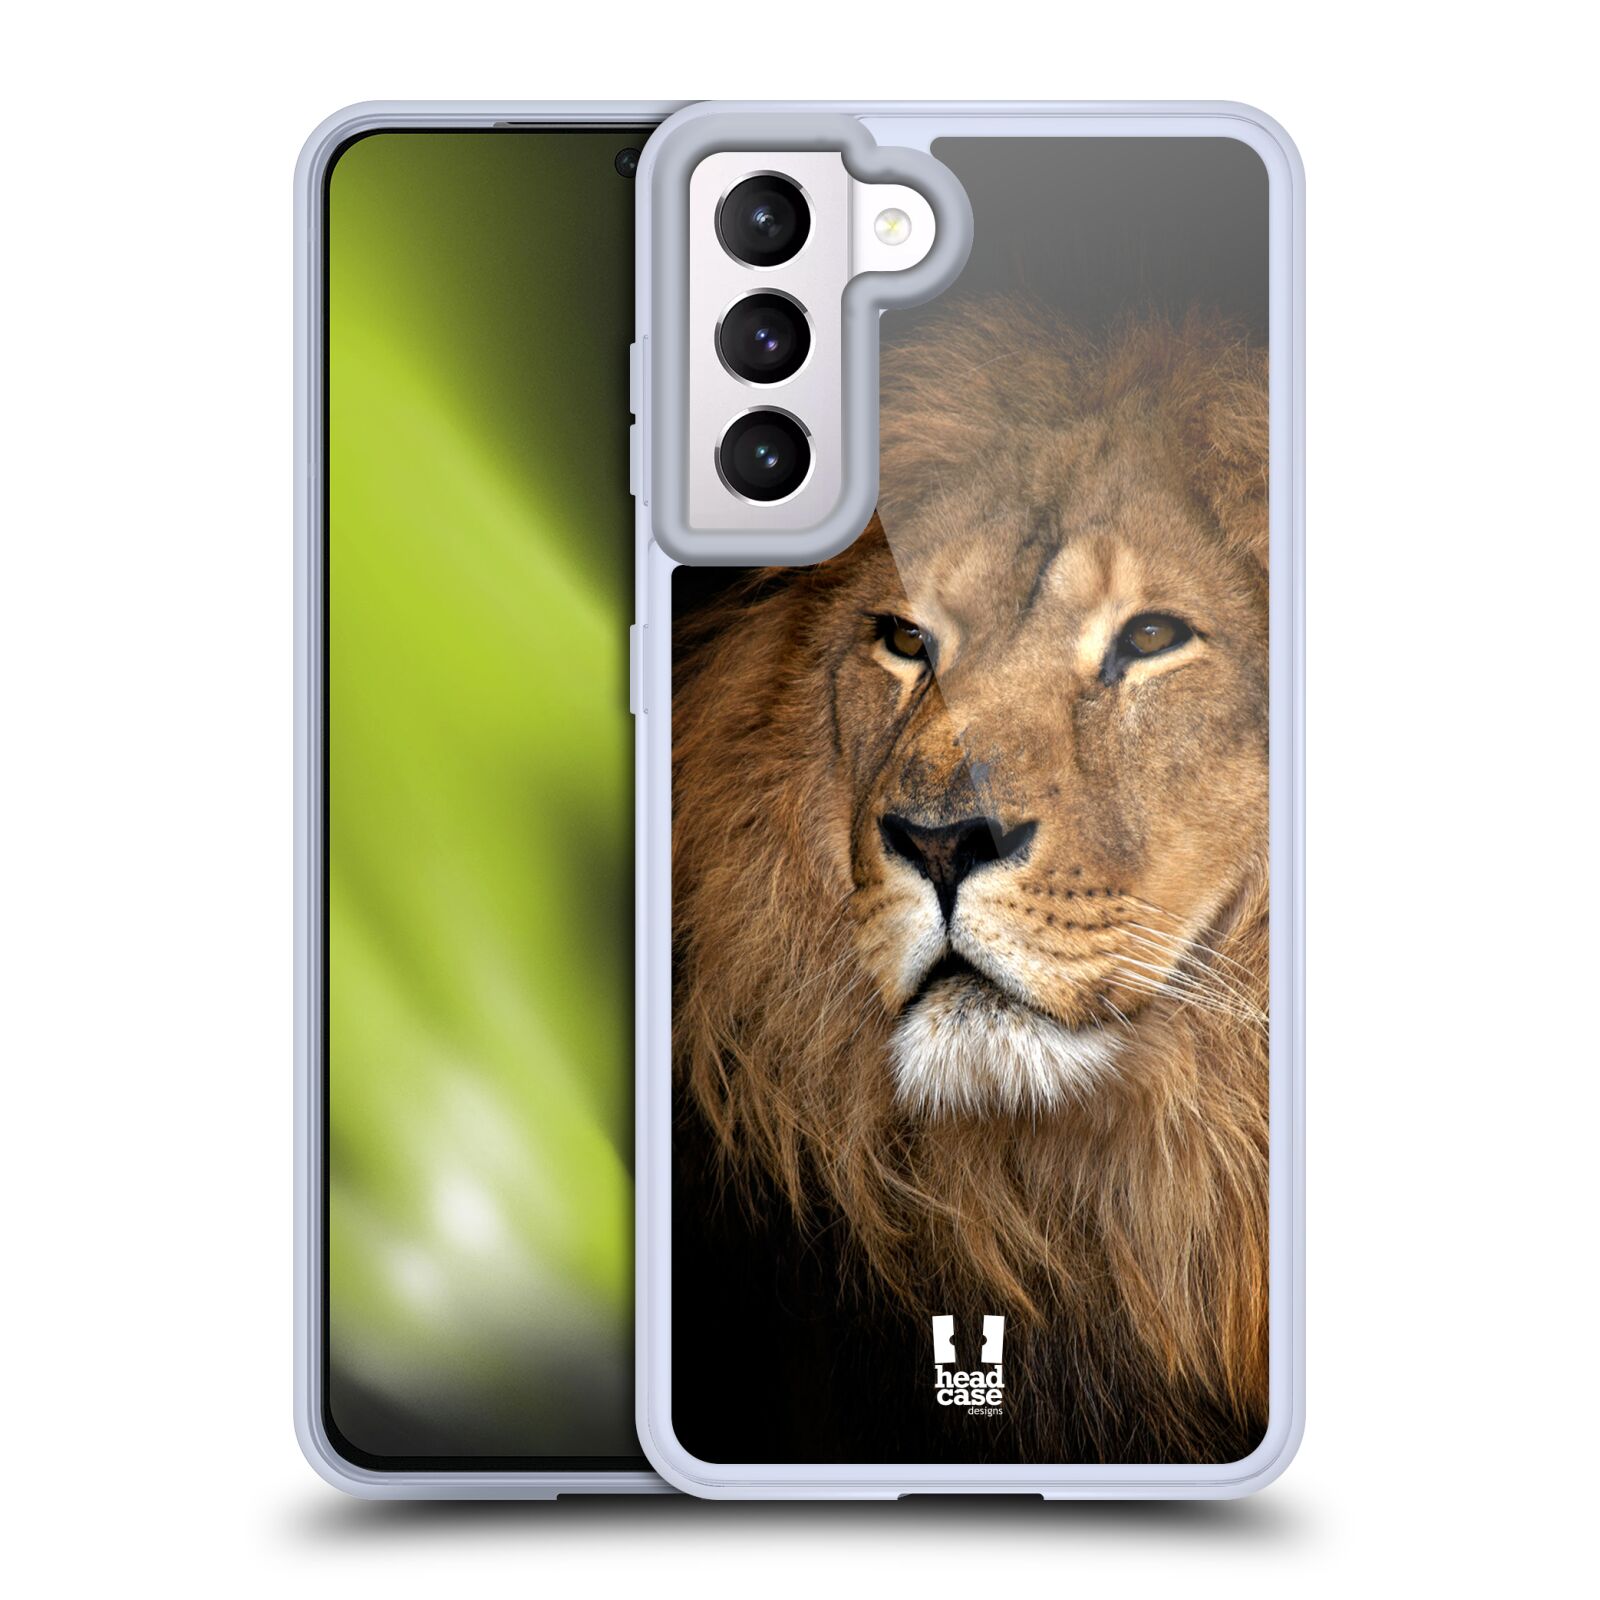 Plastový obal HEAD CASE na mobil Samsung Galaxy S21 5G vzor Divočina, Divoký život a zvířata foto LEV KRÁL ZVÍŘAT